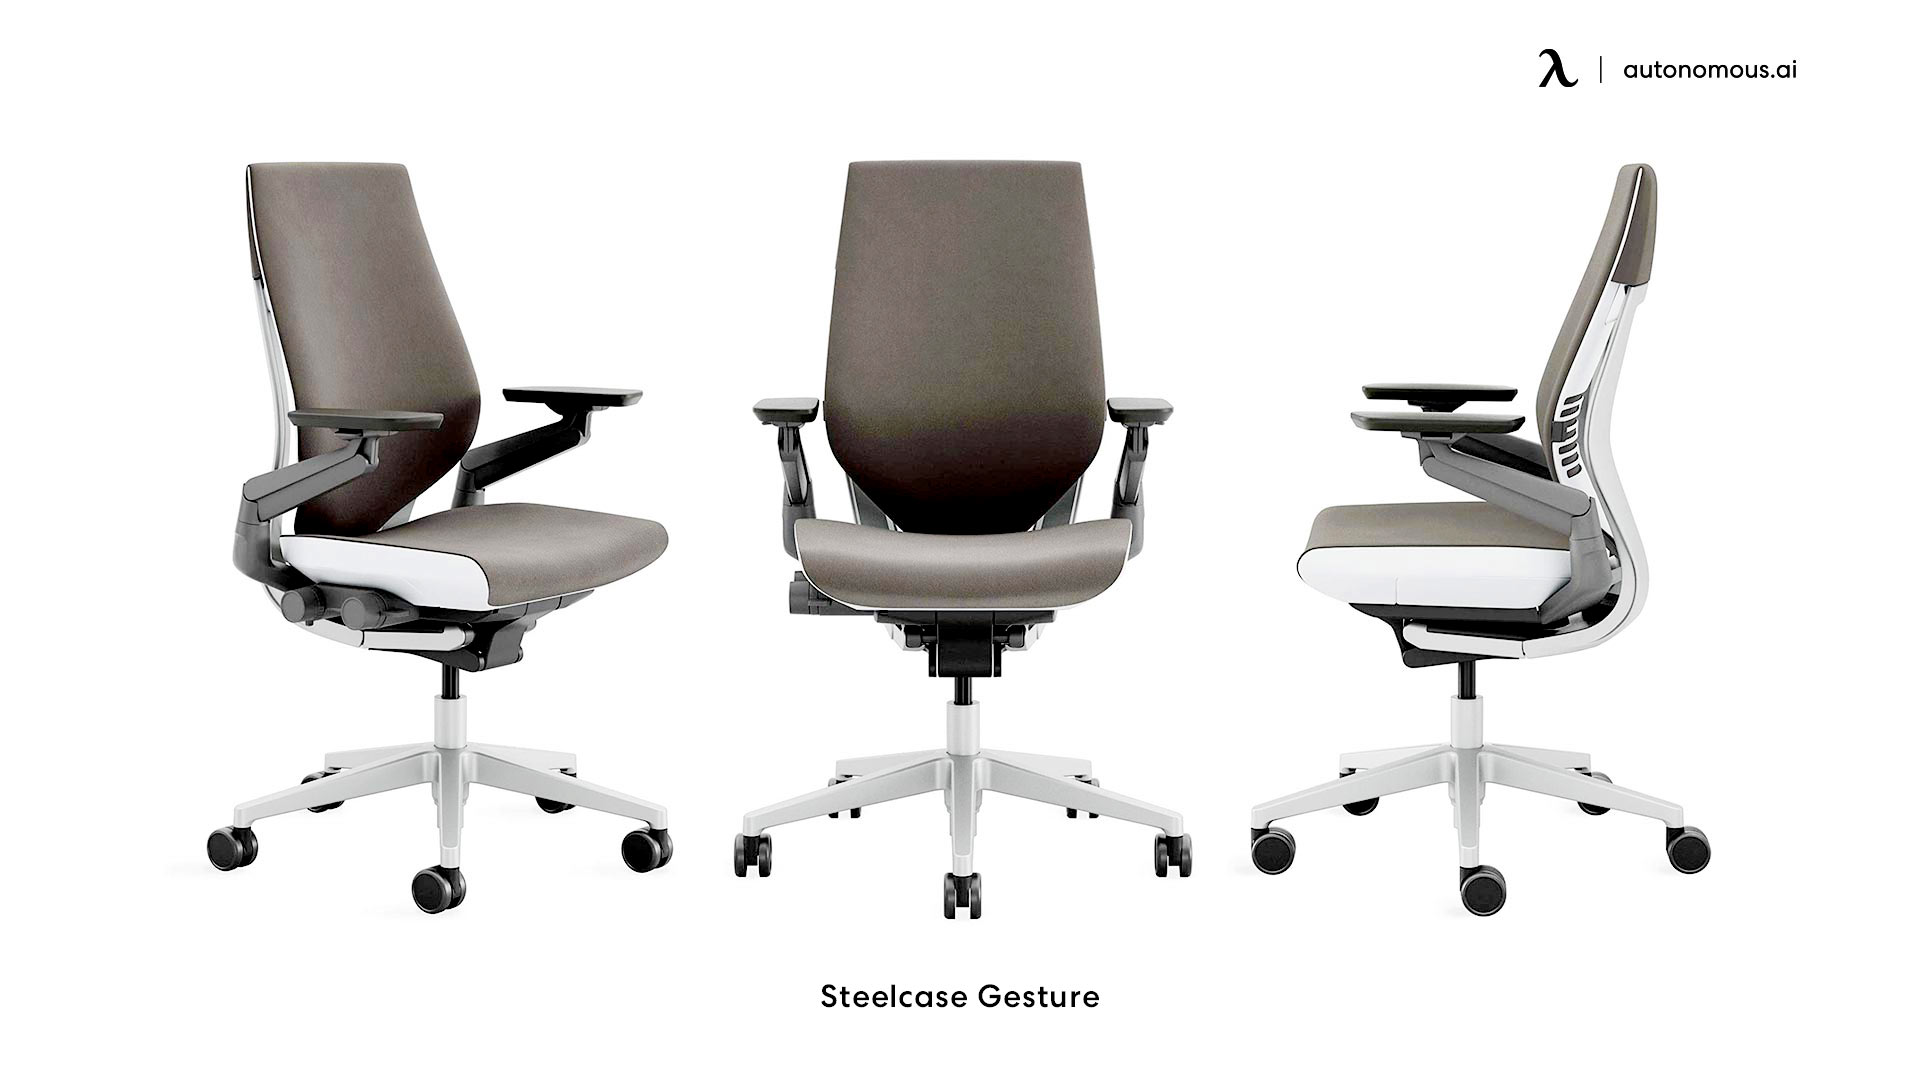 Steelcase Gesture adjustable height chair